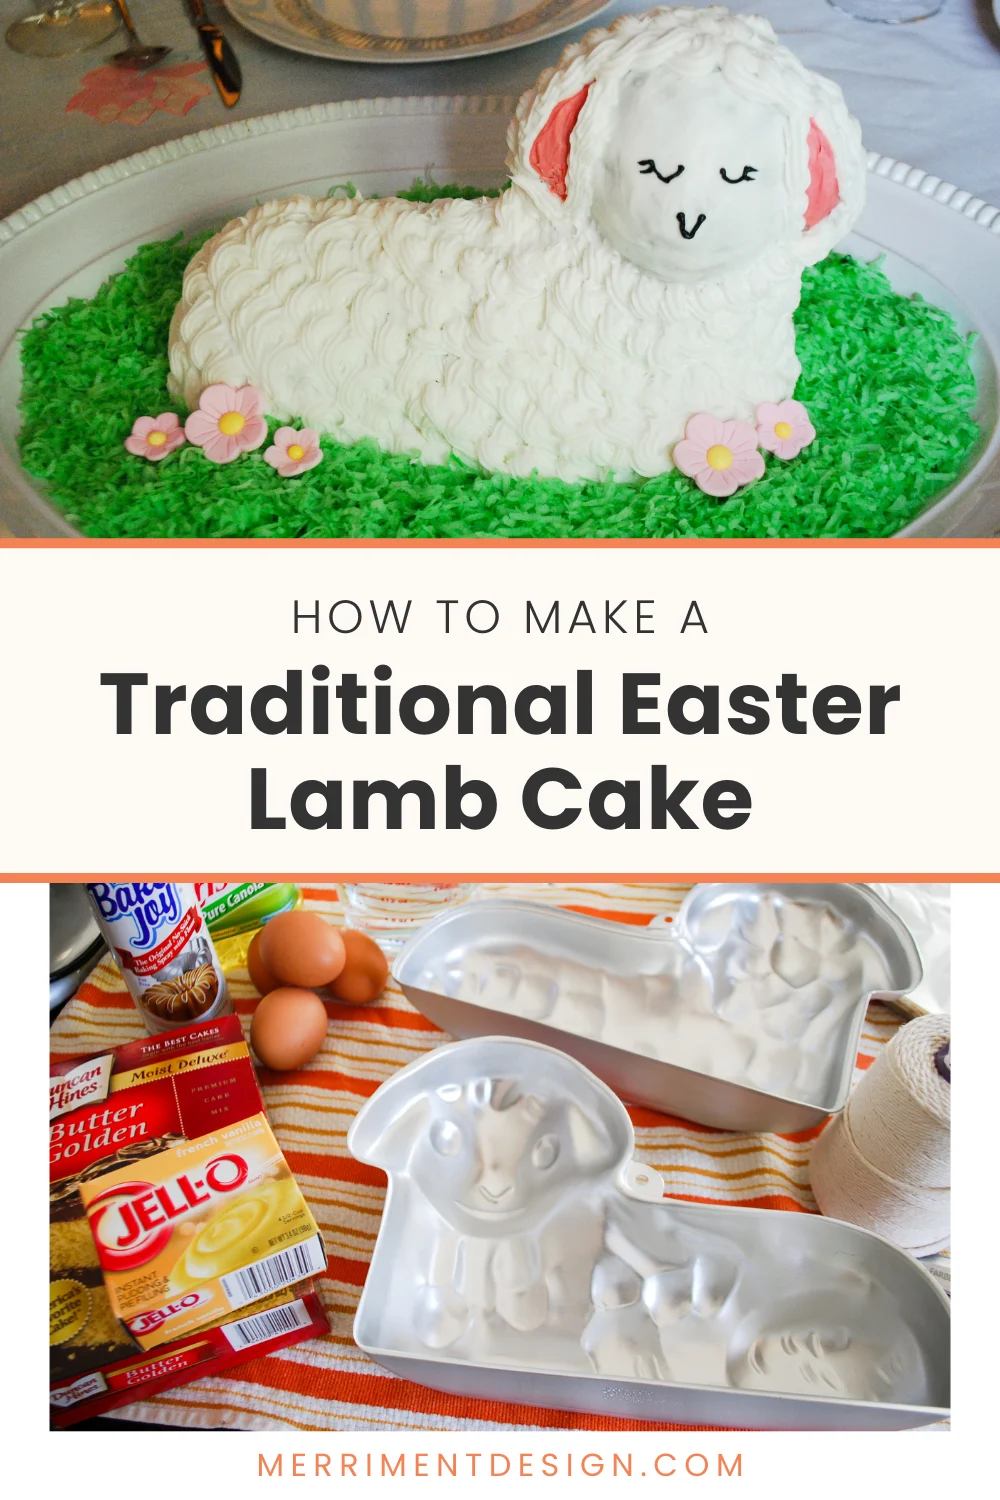 Lamb cake for Easter using a traditional lamb cake pan